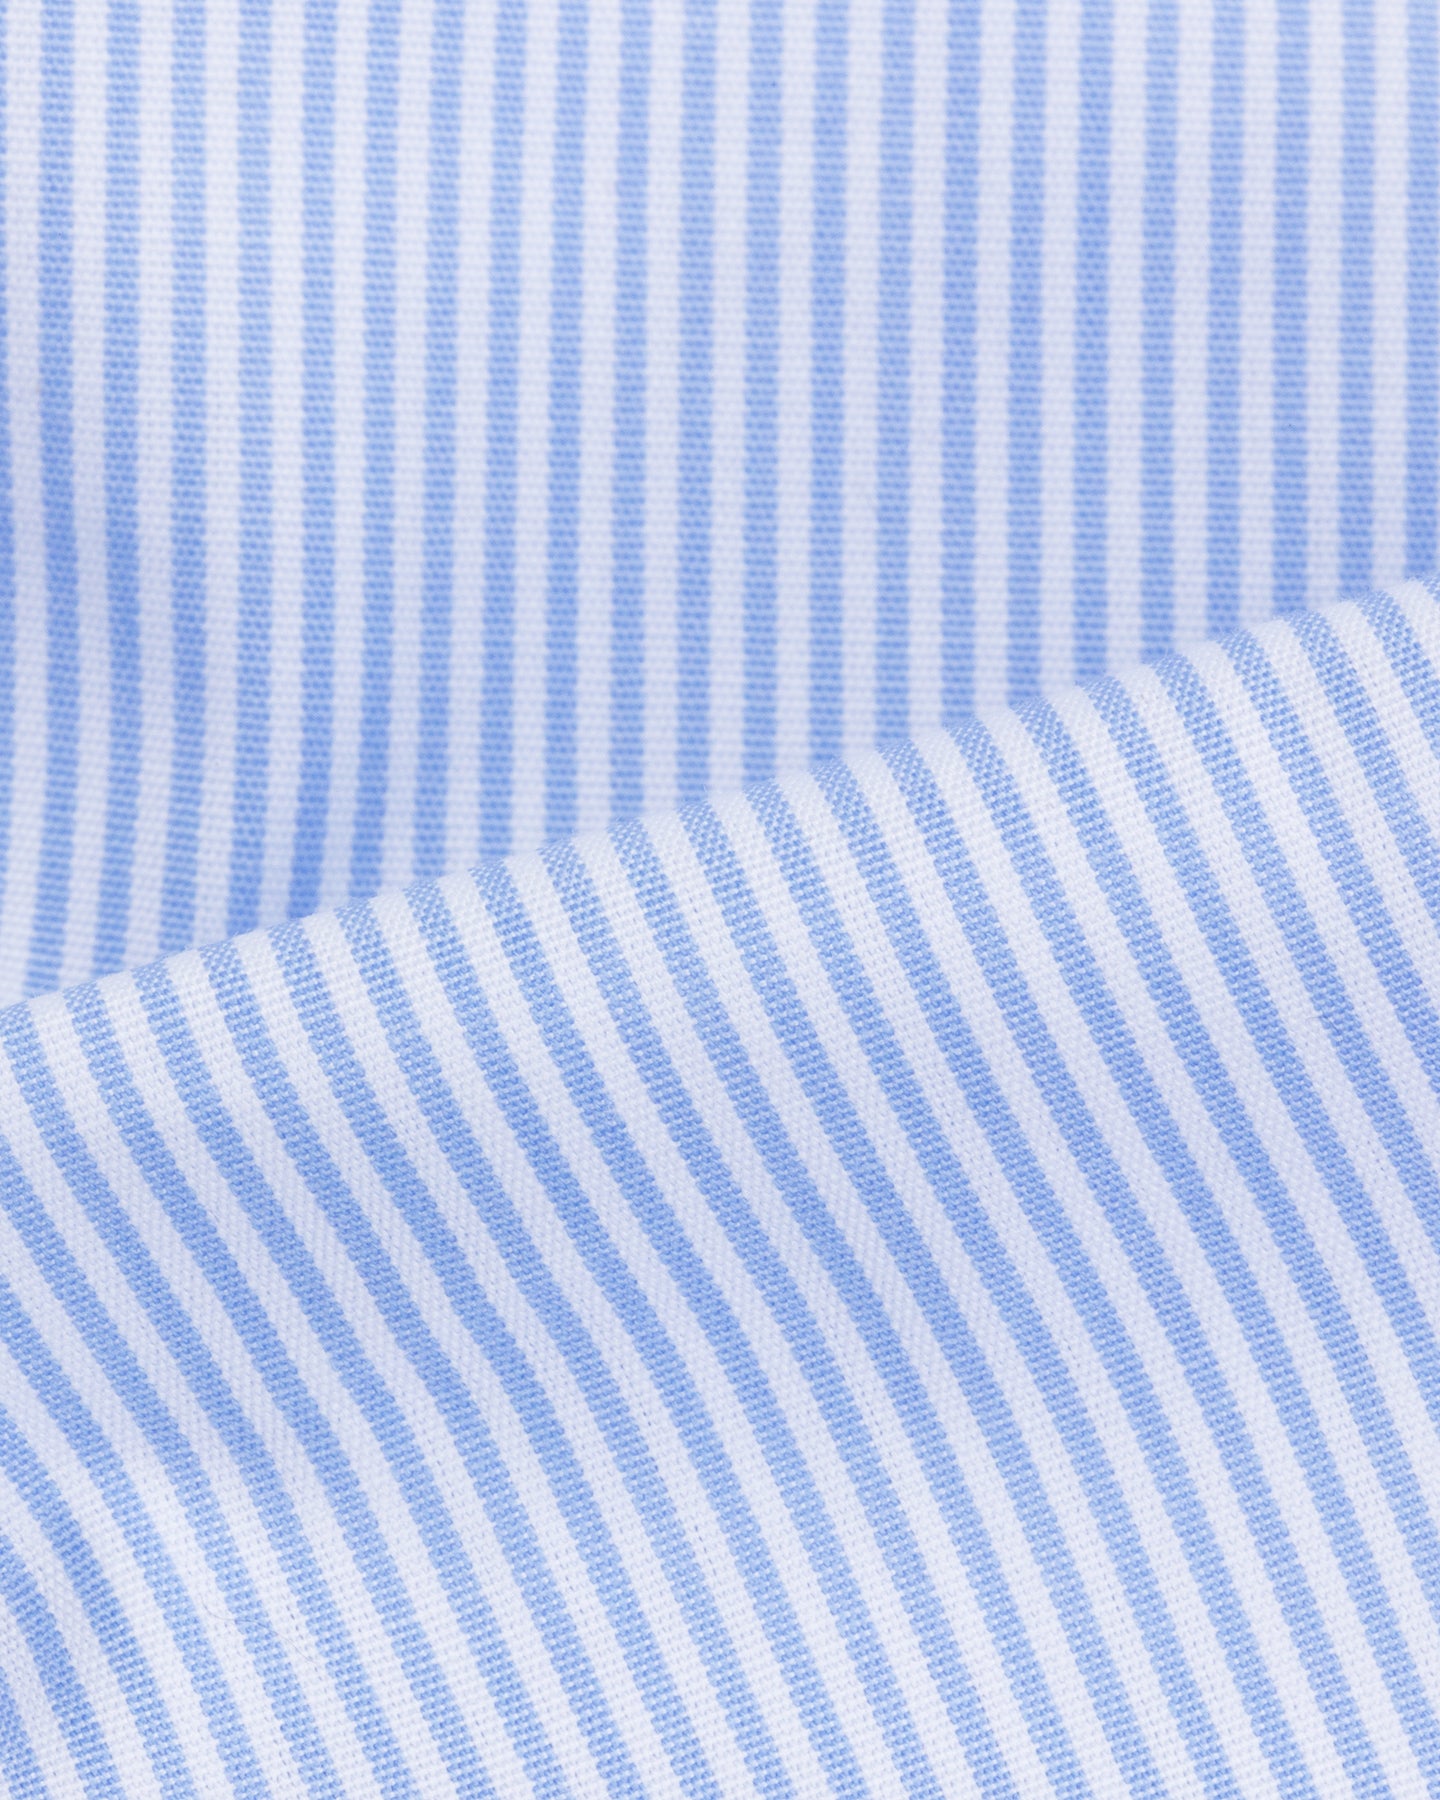 Fine Bengal stripe poplin shirt fabric